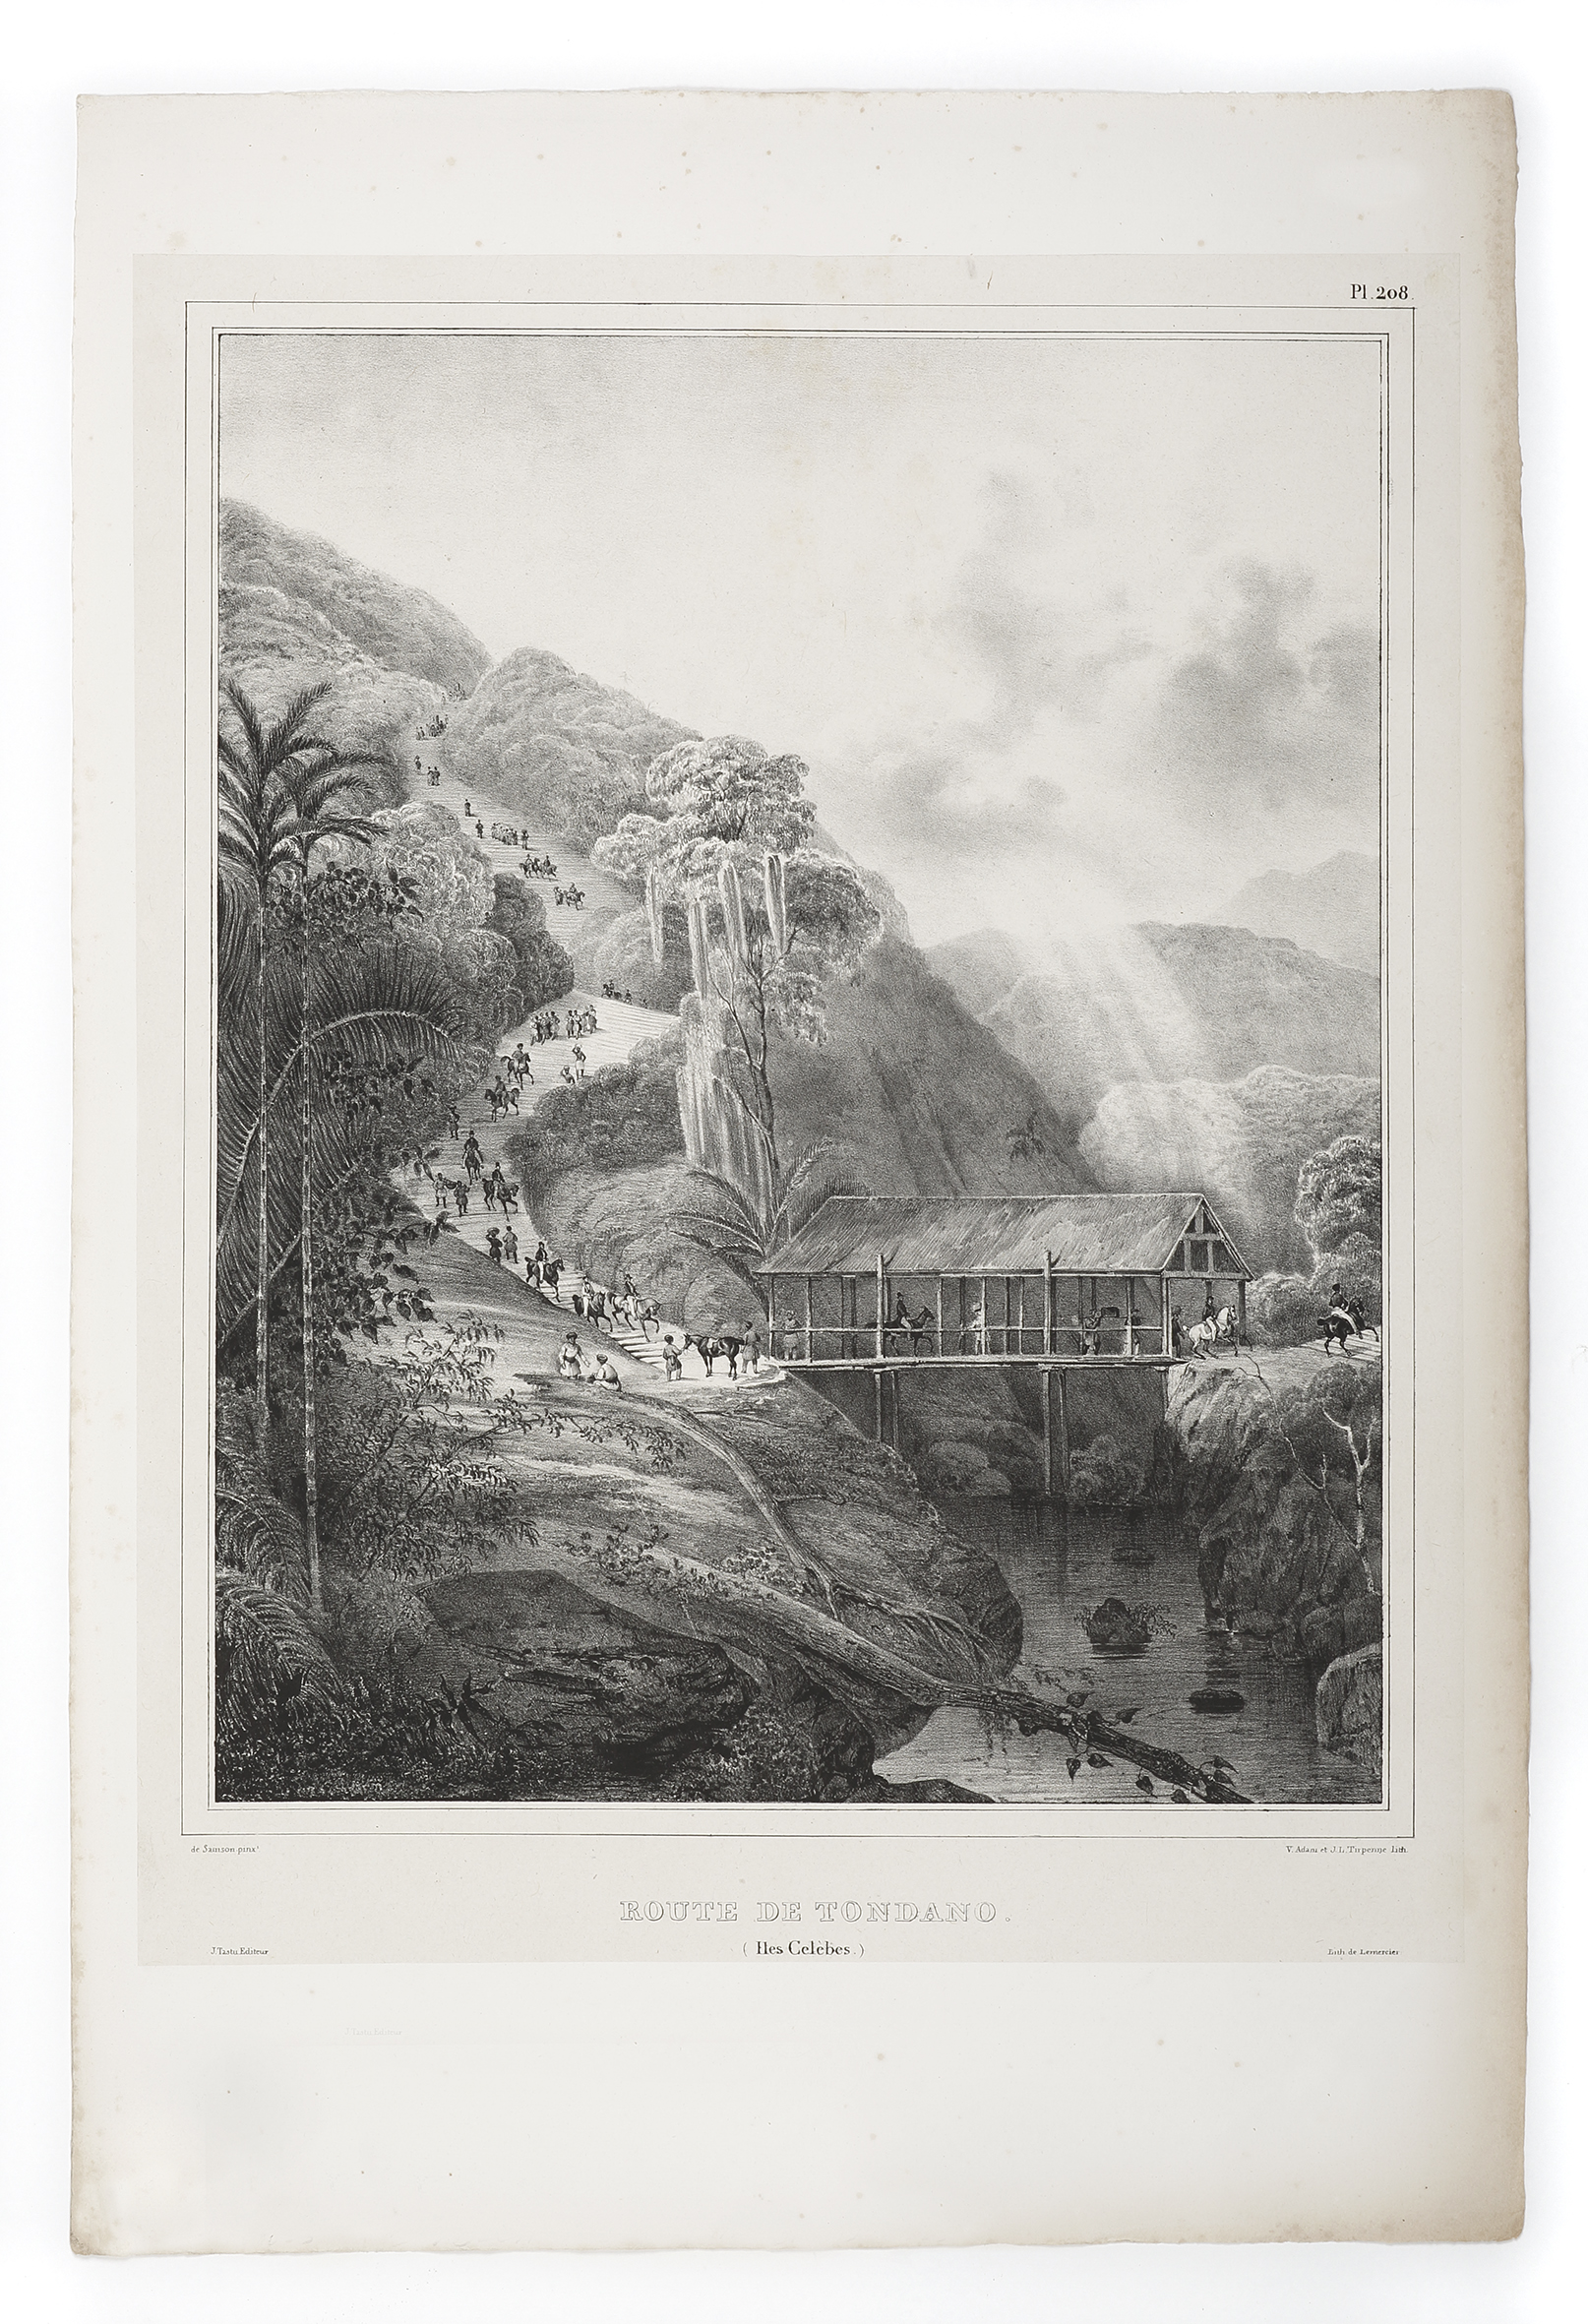 Route de Tondano. (Iles Celebes.) - Antique View from 1833